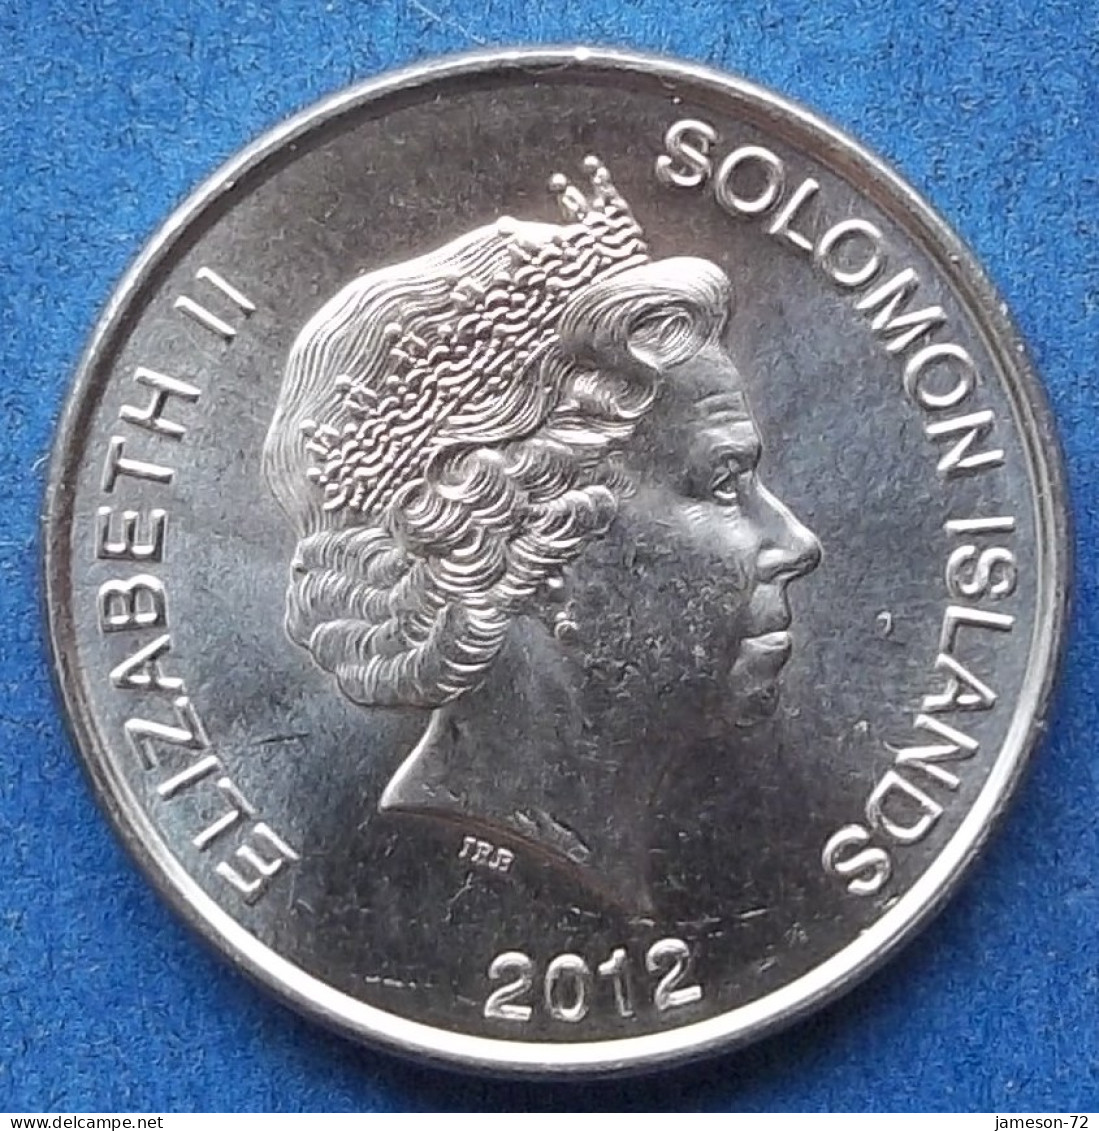 SOLOMON ISLANDS - 10 Censt 2012 "Sea Spirit Ngoreru" KM# 235 Commonwealth Nation, Elizabeth II - Edelweiss Coins - Solomon Islands